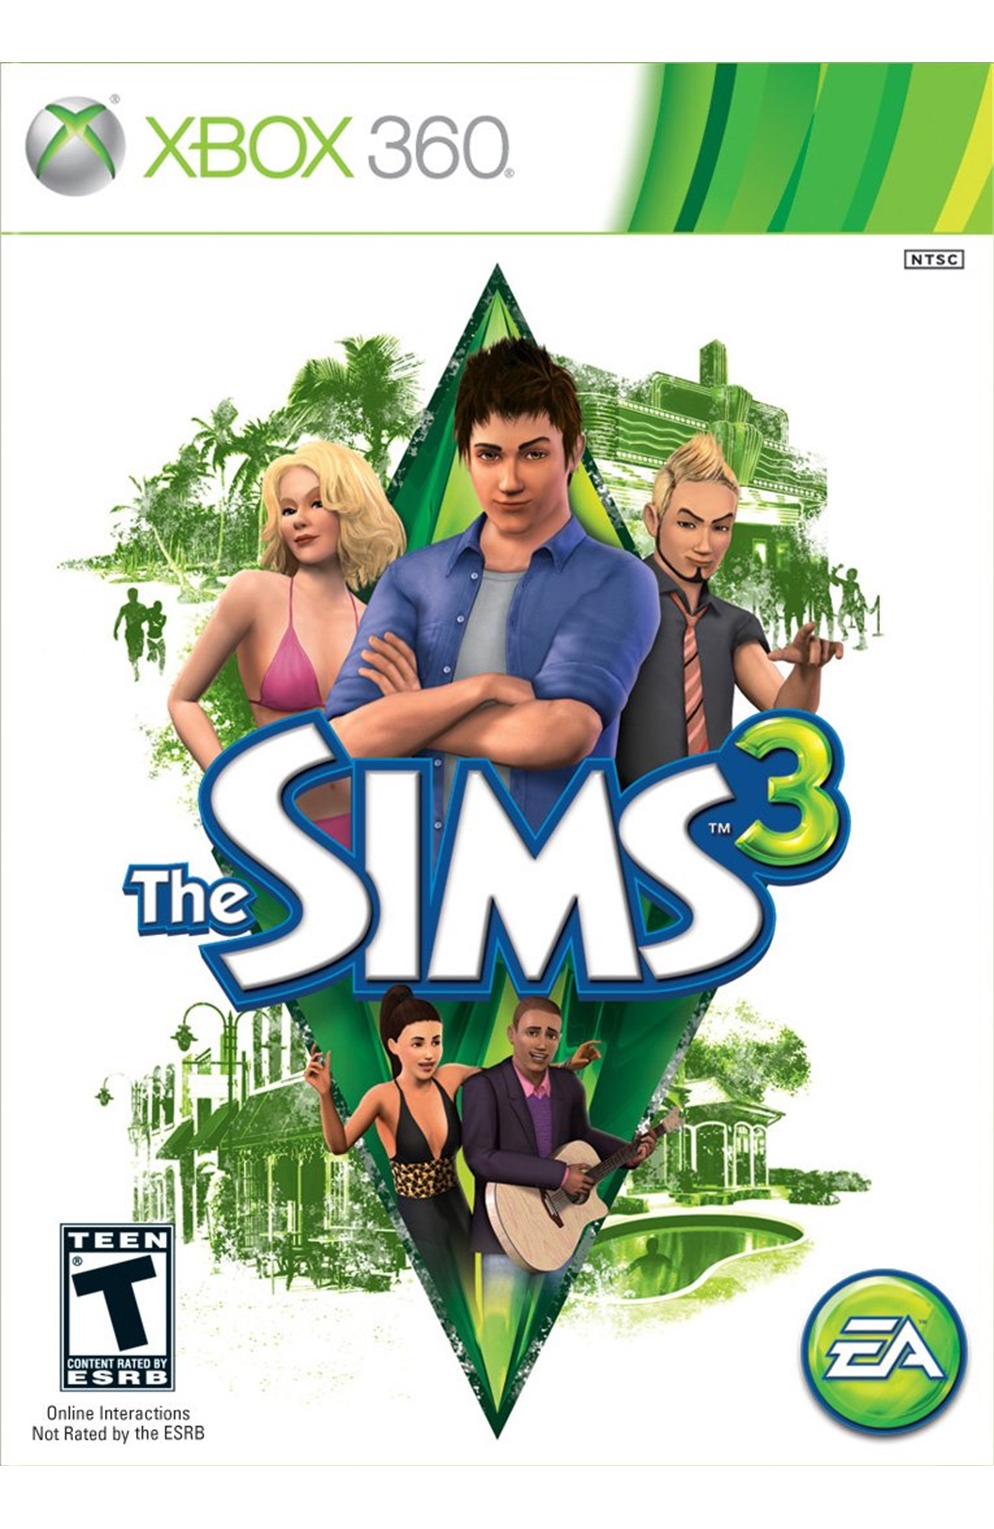 Xbox 360 Xb360 The Sims 3